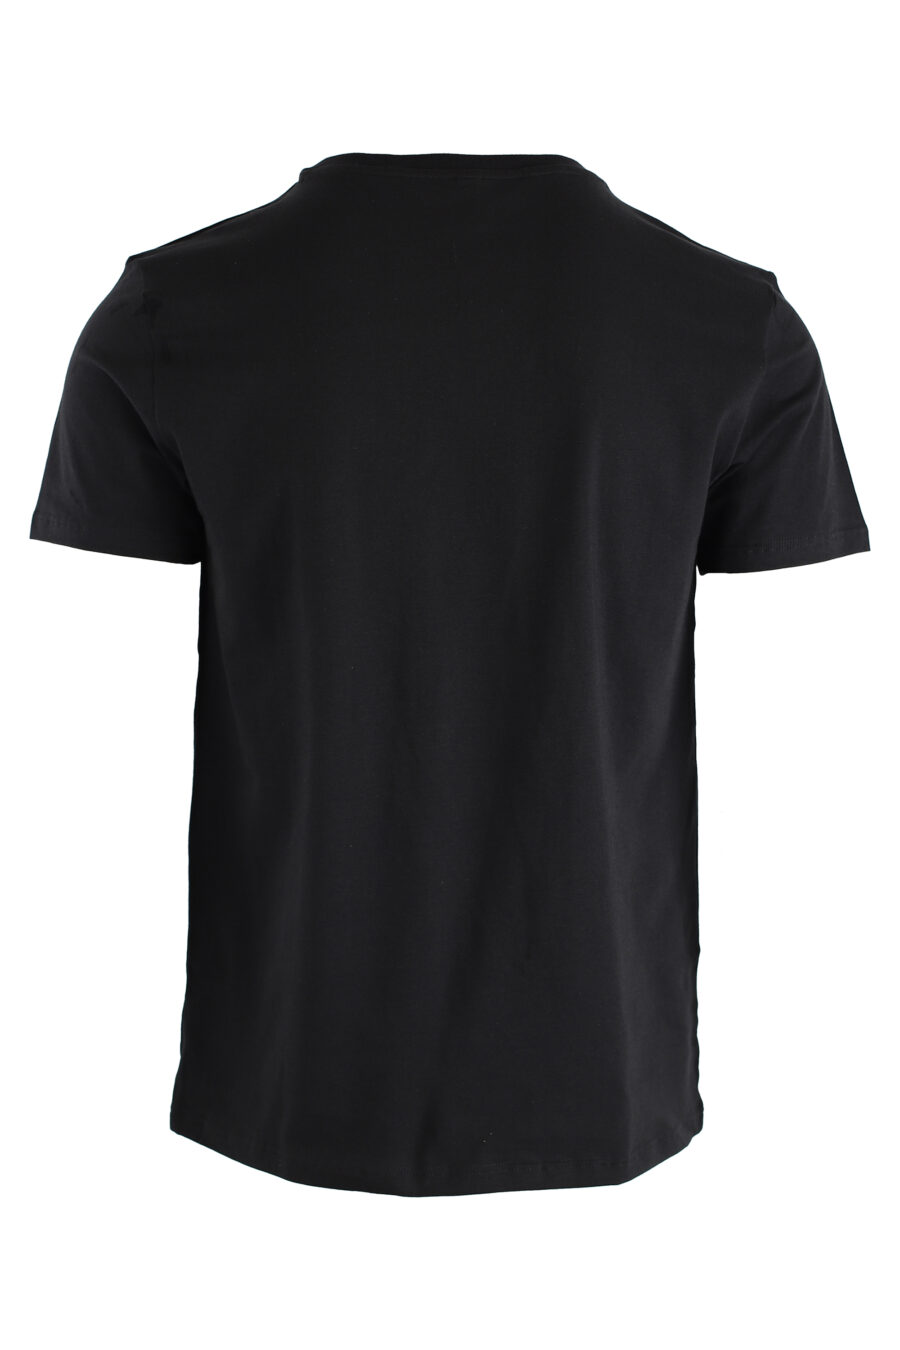 Schwarzes T-Shirt und Boxer-Set mit goldenem Mini-Logo - IMG 7603